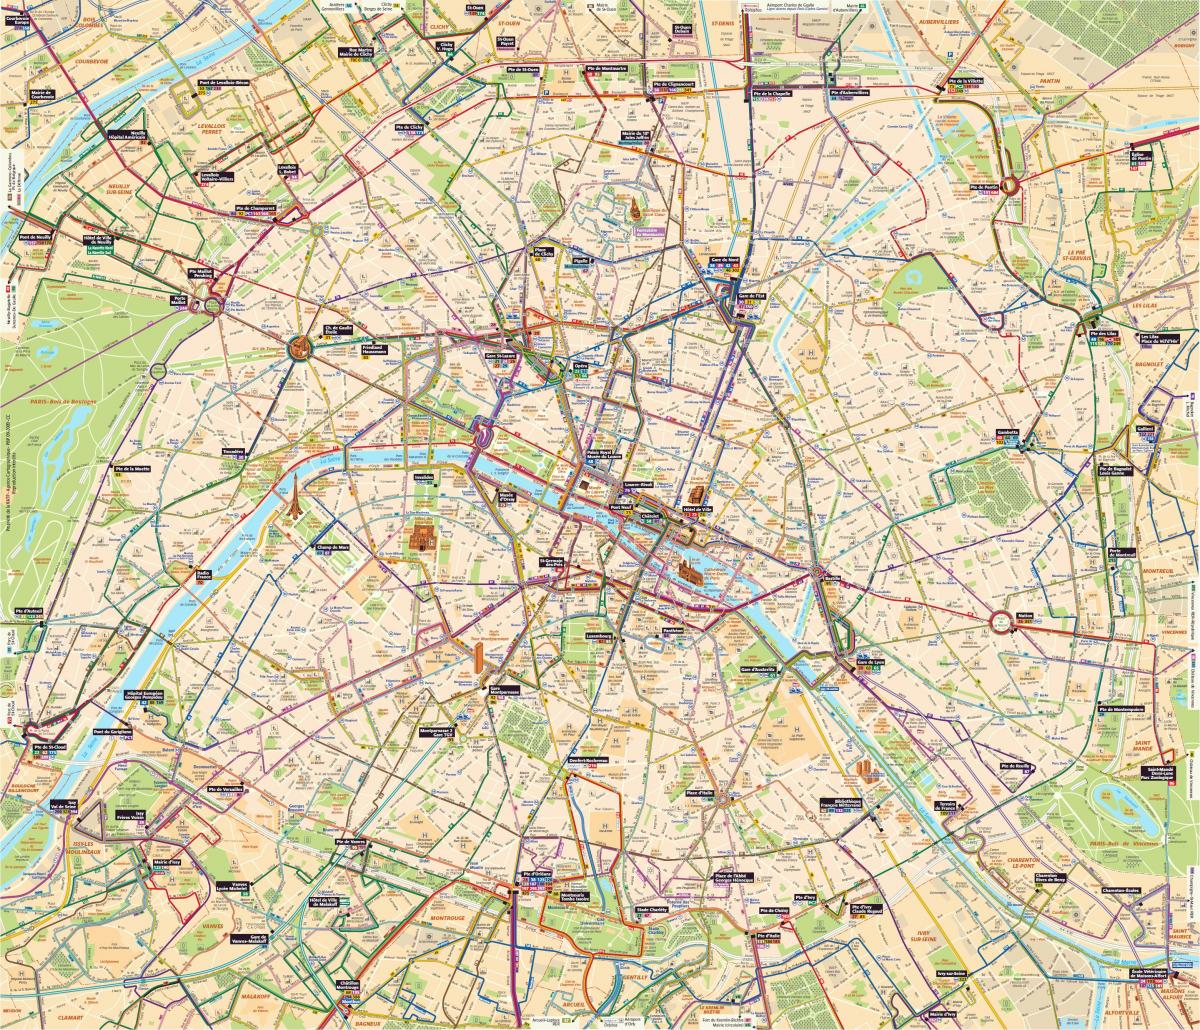 Kart Parisin avtobus